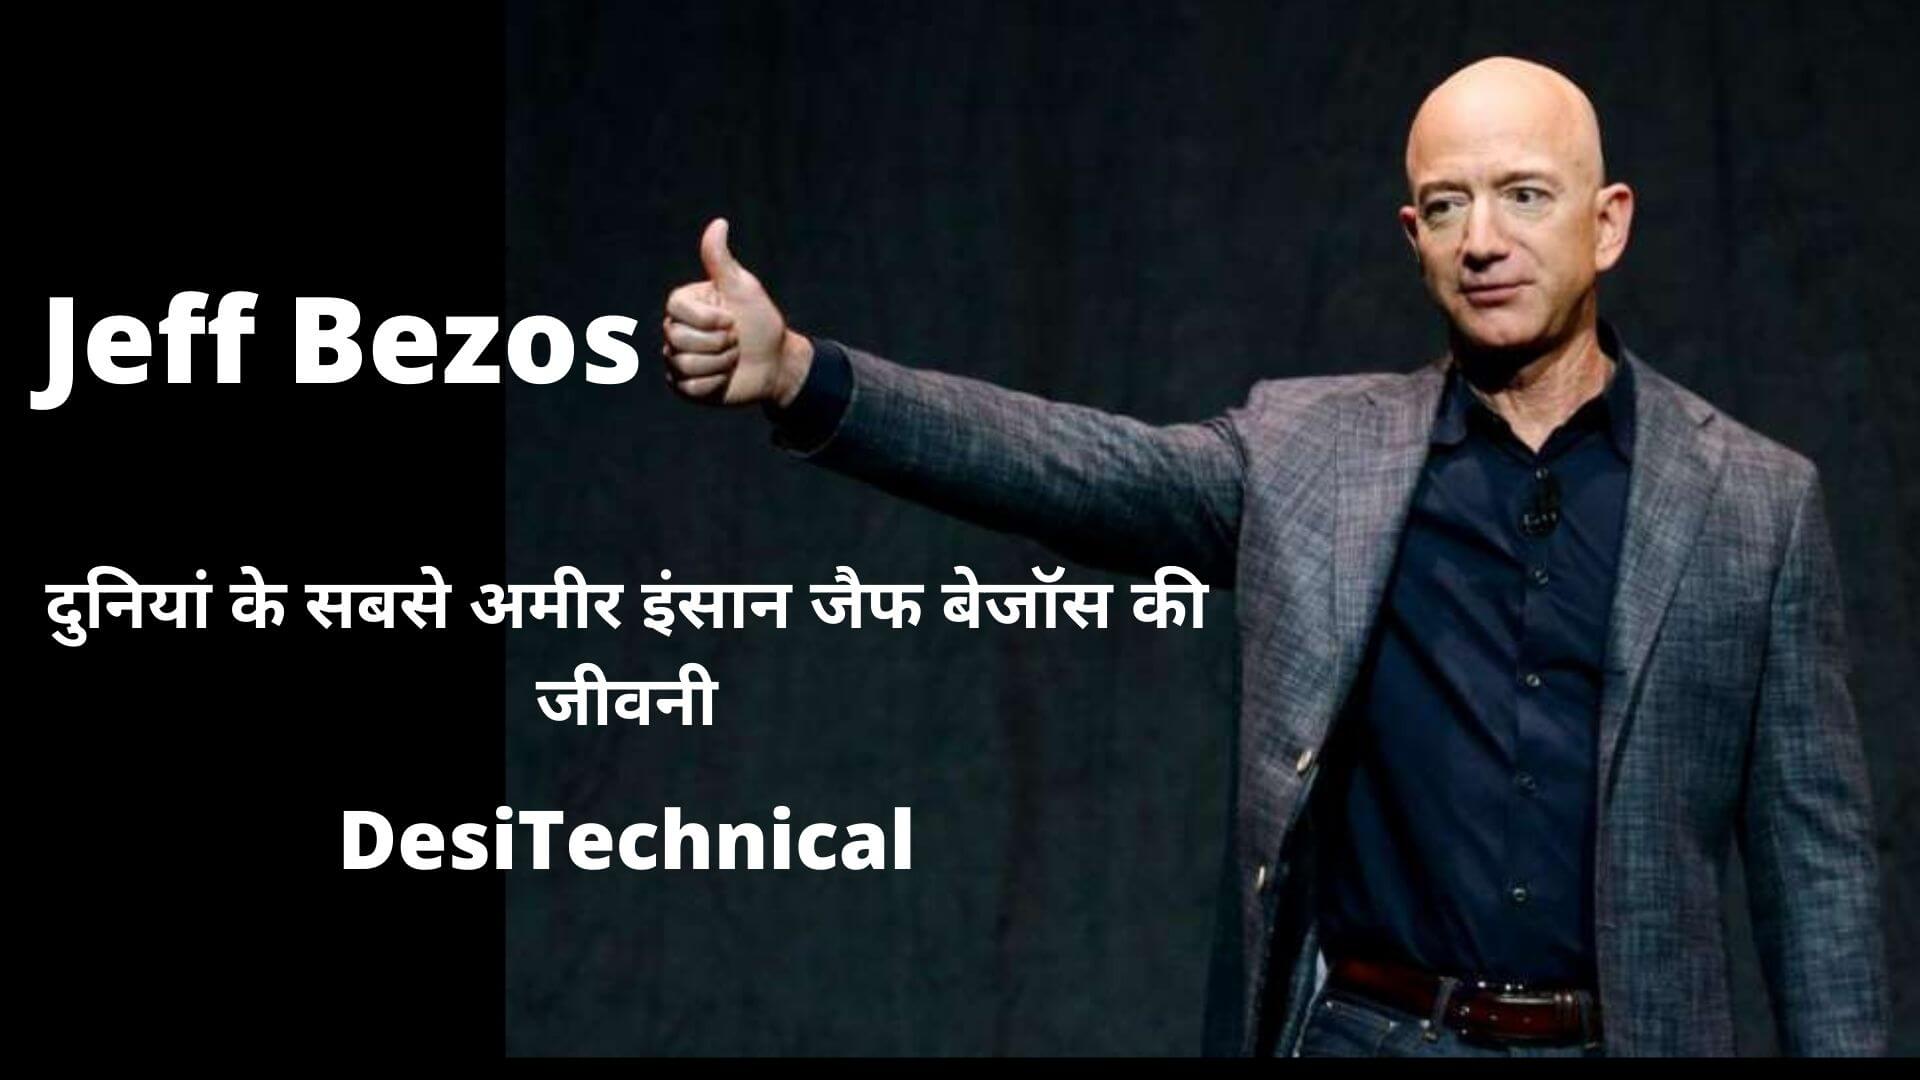 Jeff Bezos biography in hindi